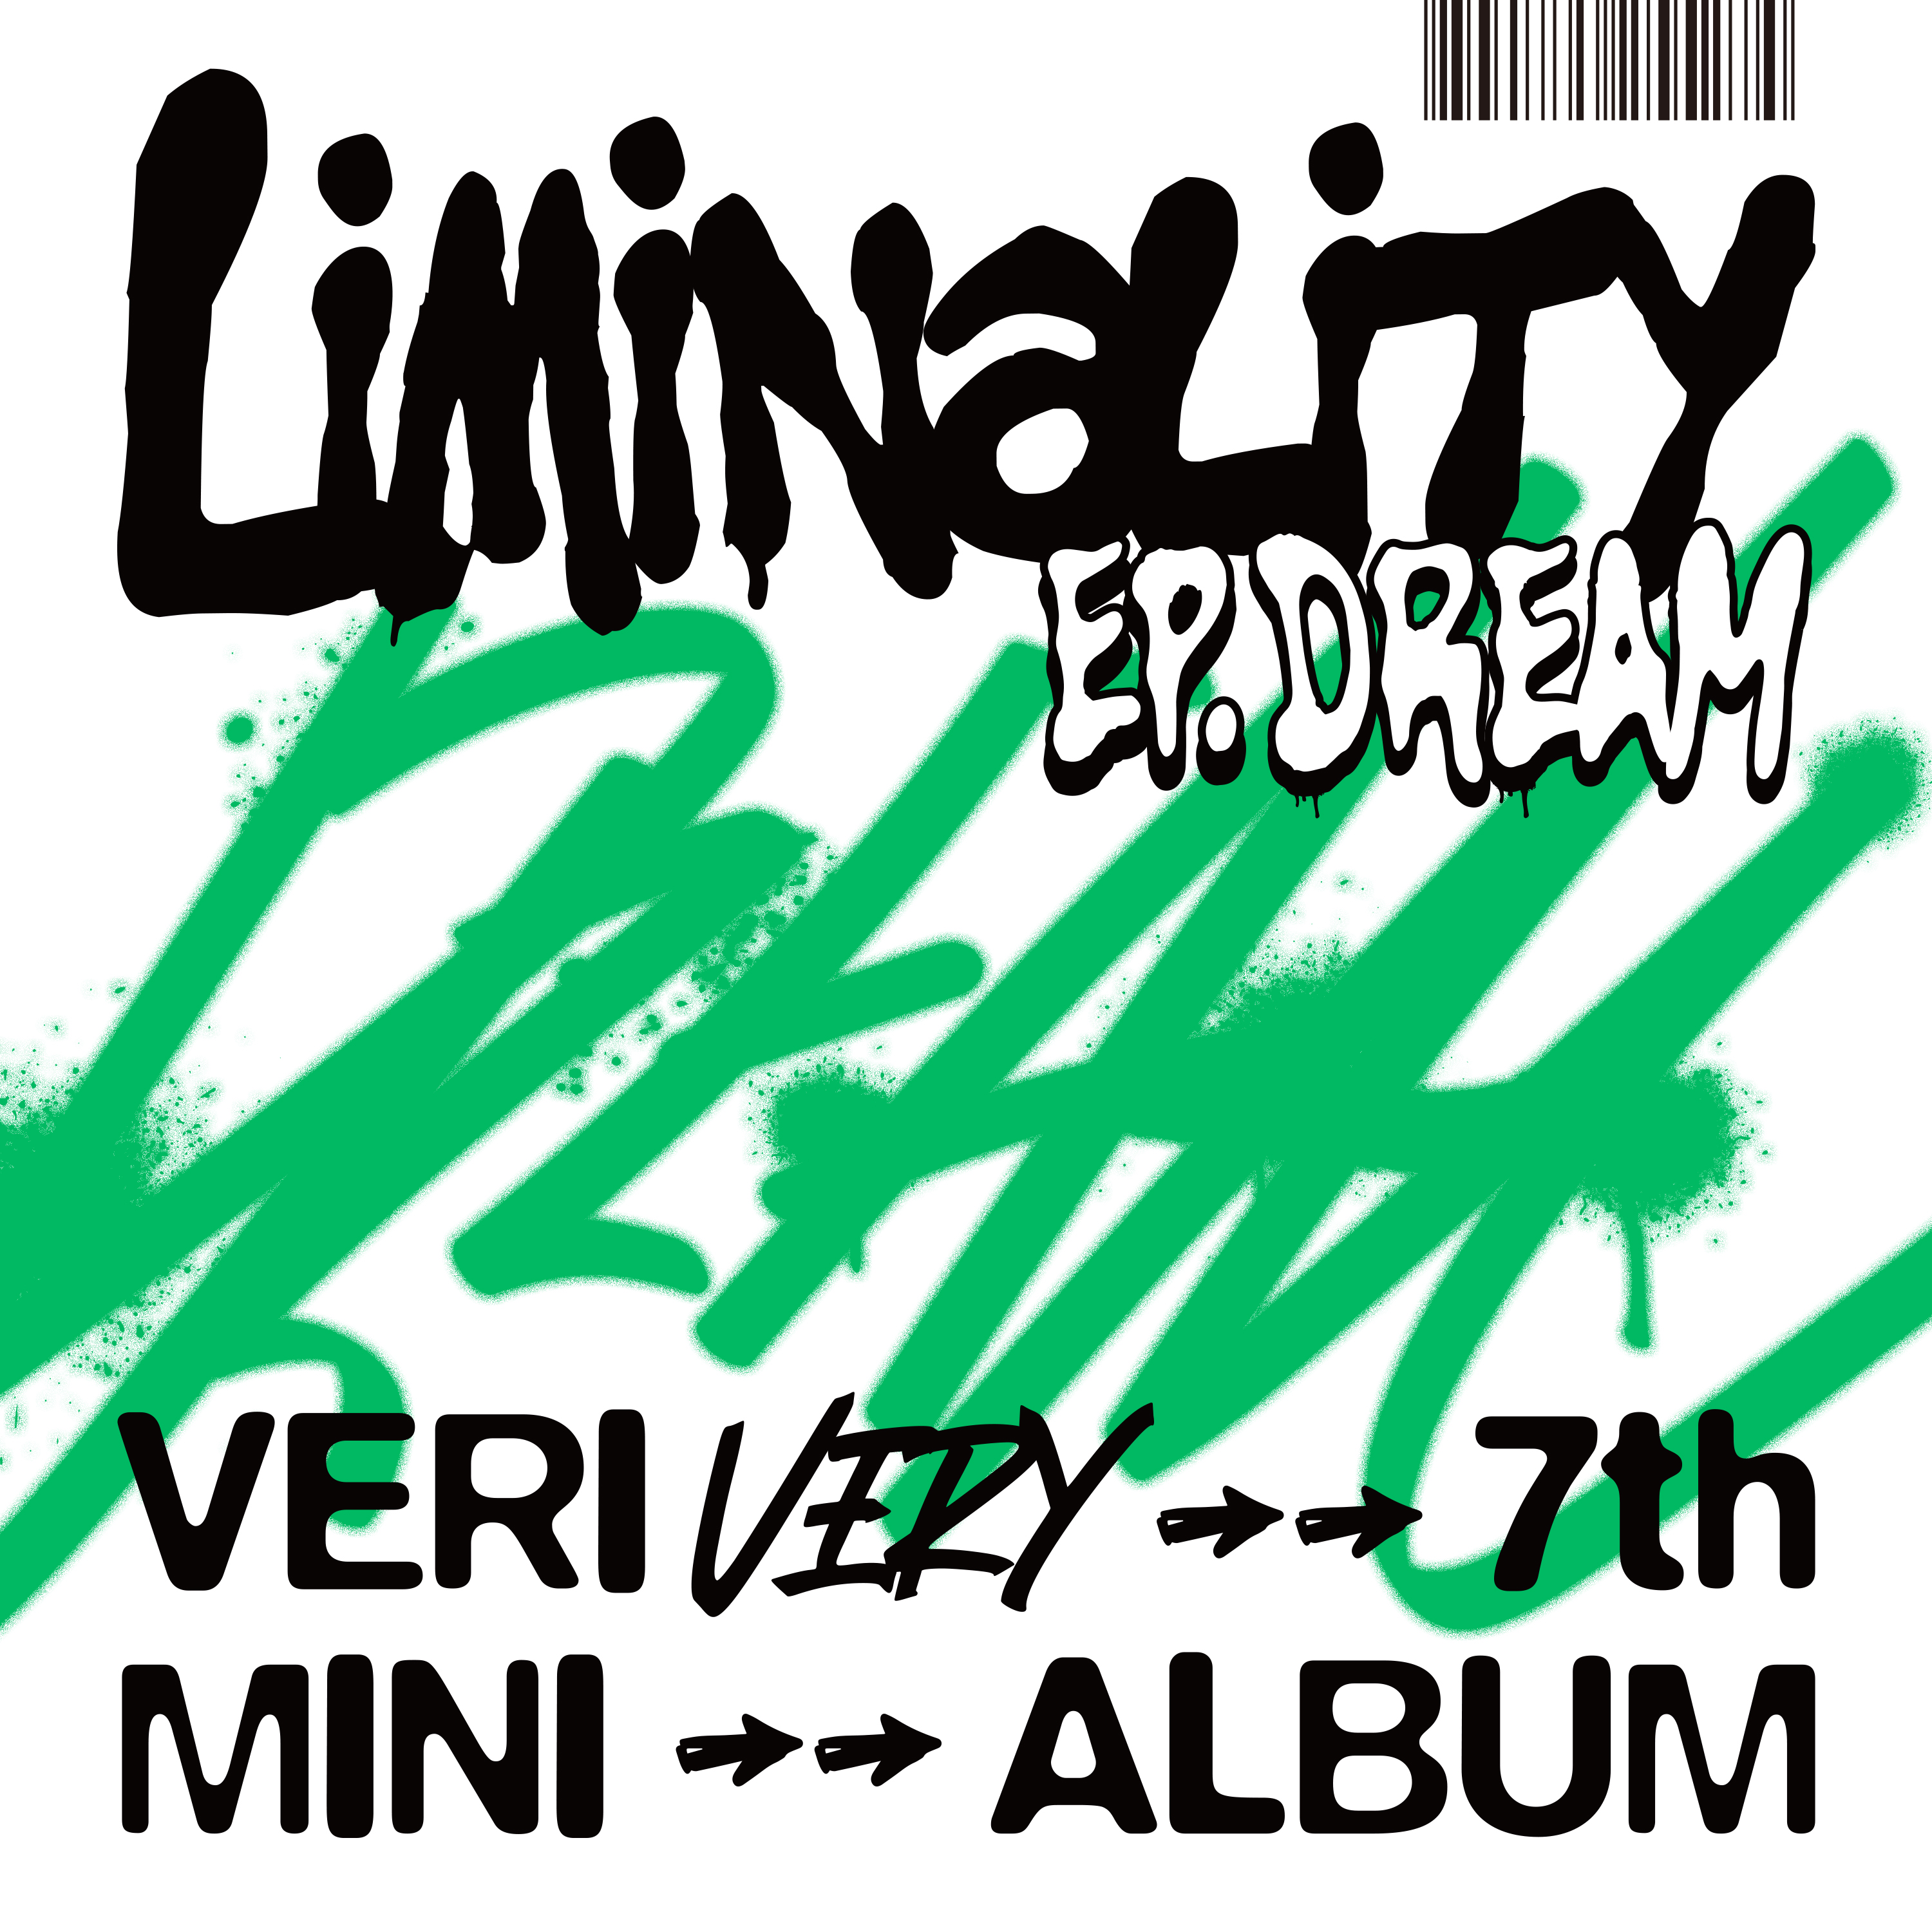 VERIVERY - 7th Mini Album [Liminality - EP.DREAM] (PLAY ver.)케이팝스토어(kpop store)